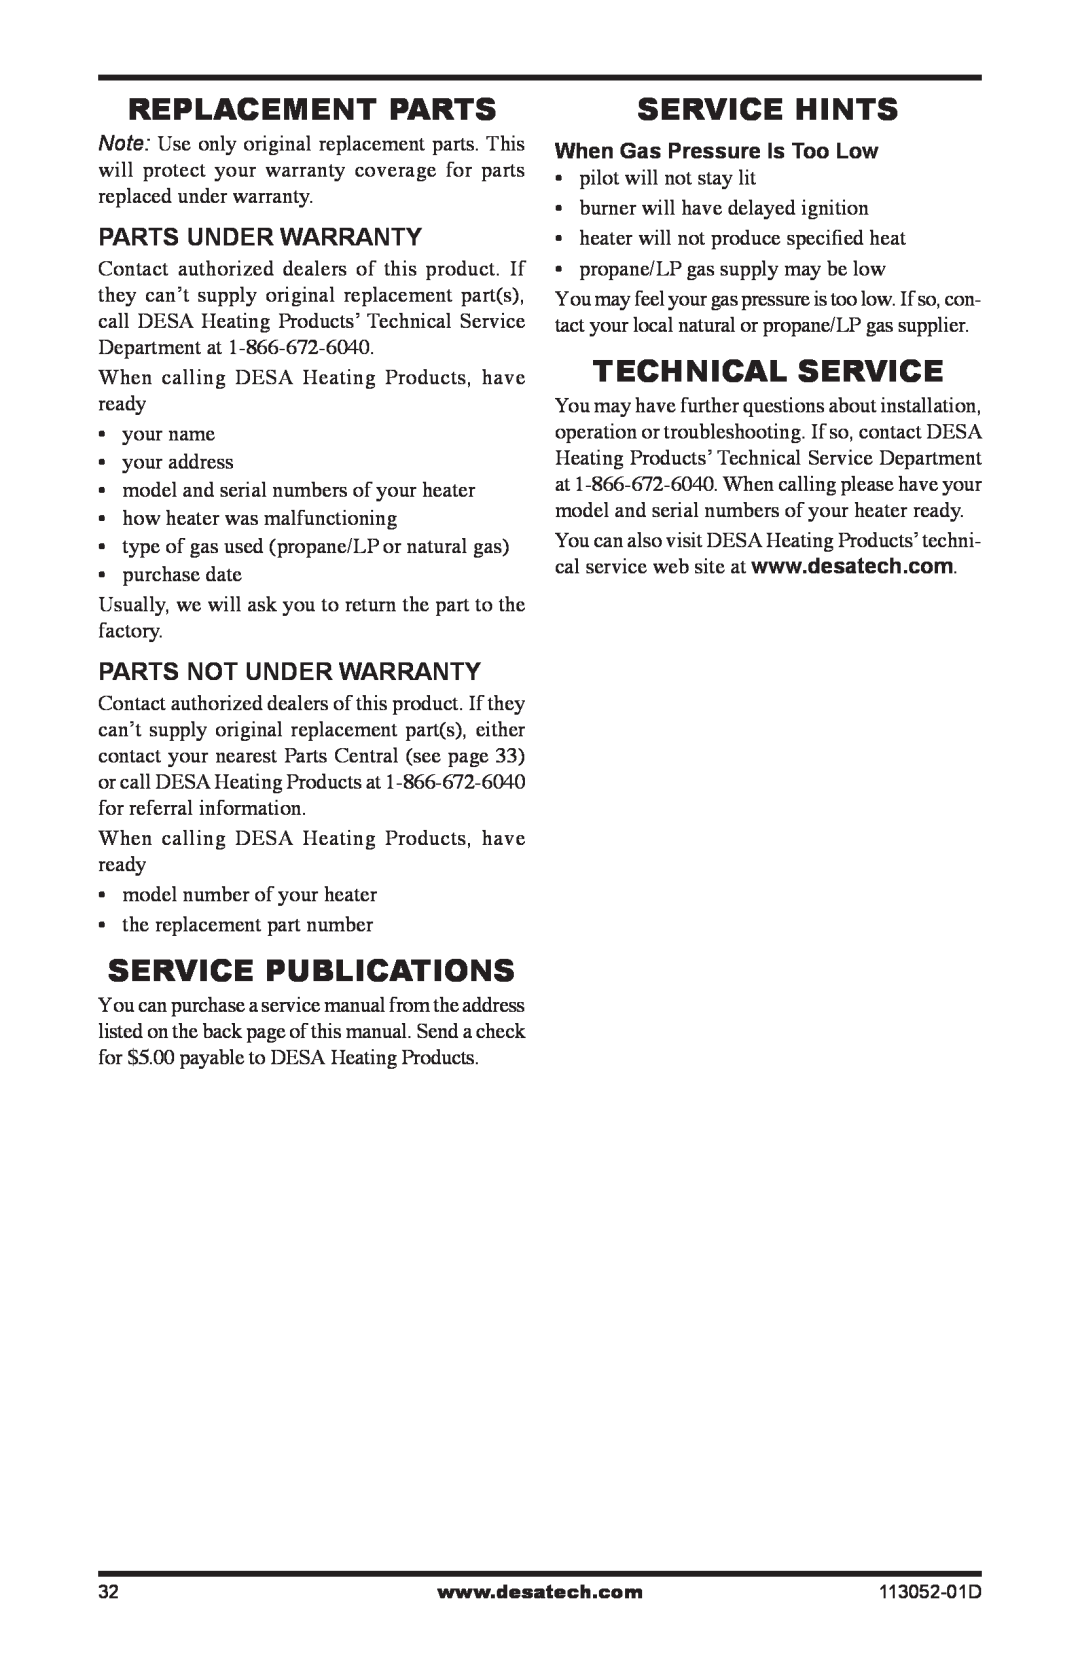 Desa VP16TA, VN18A, VP16A Replacement Parts, Service Publications, Service Hints, Technical Service, Parts Under Warranty 